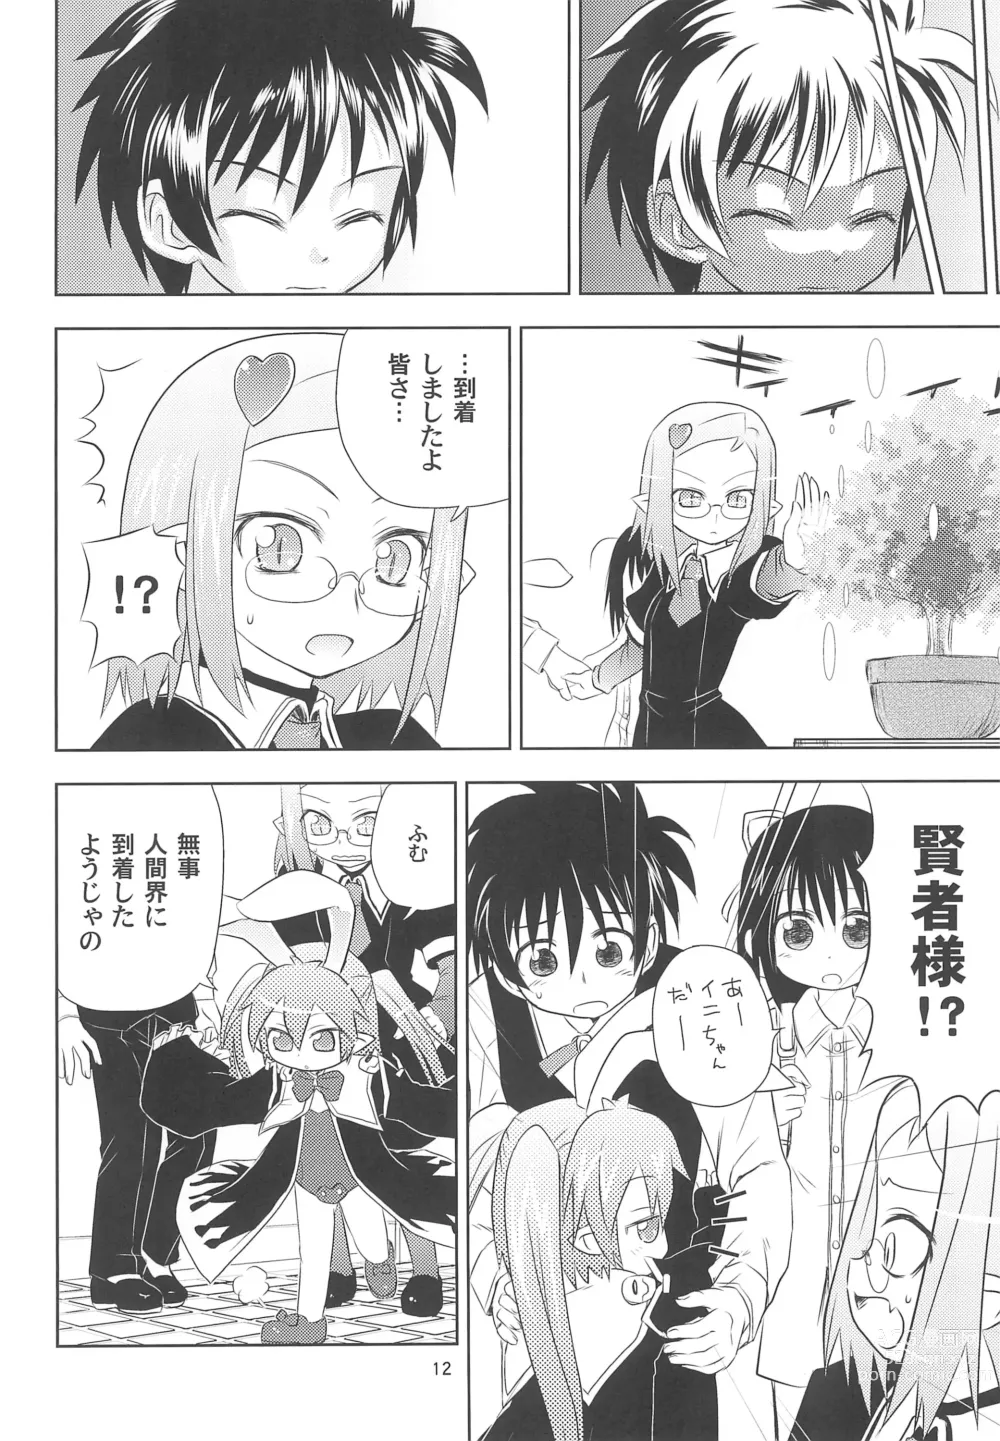 Page 12 of doujinshi Maigo no Maigo no Hime-sama Plus